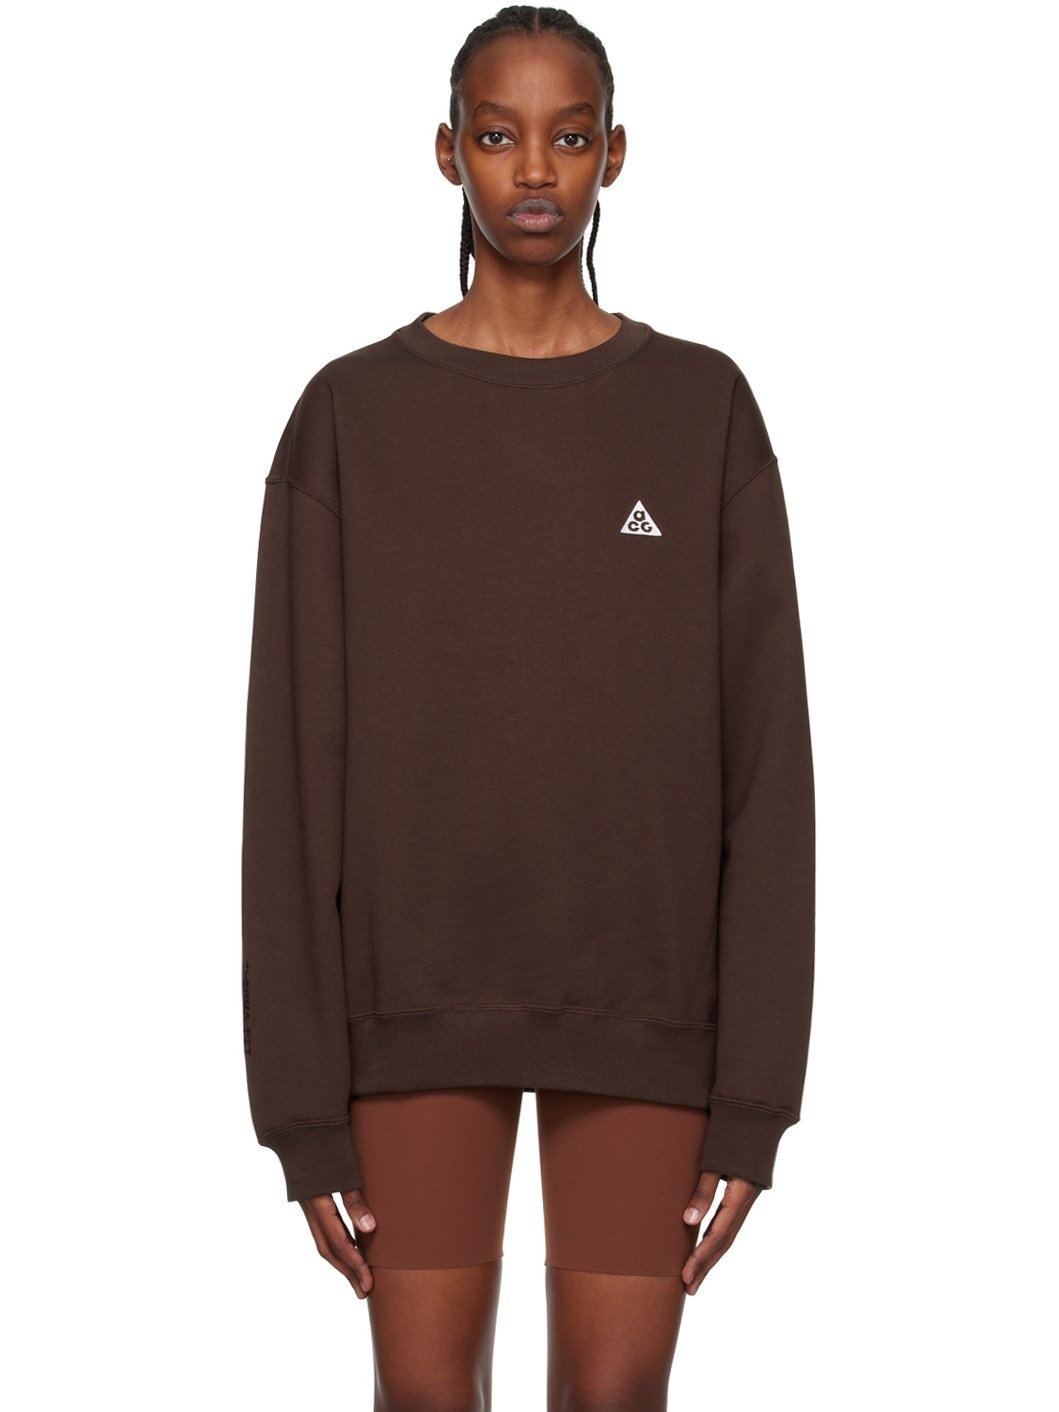 Brown Crewneck Sweatshirt - 1